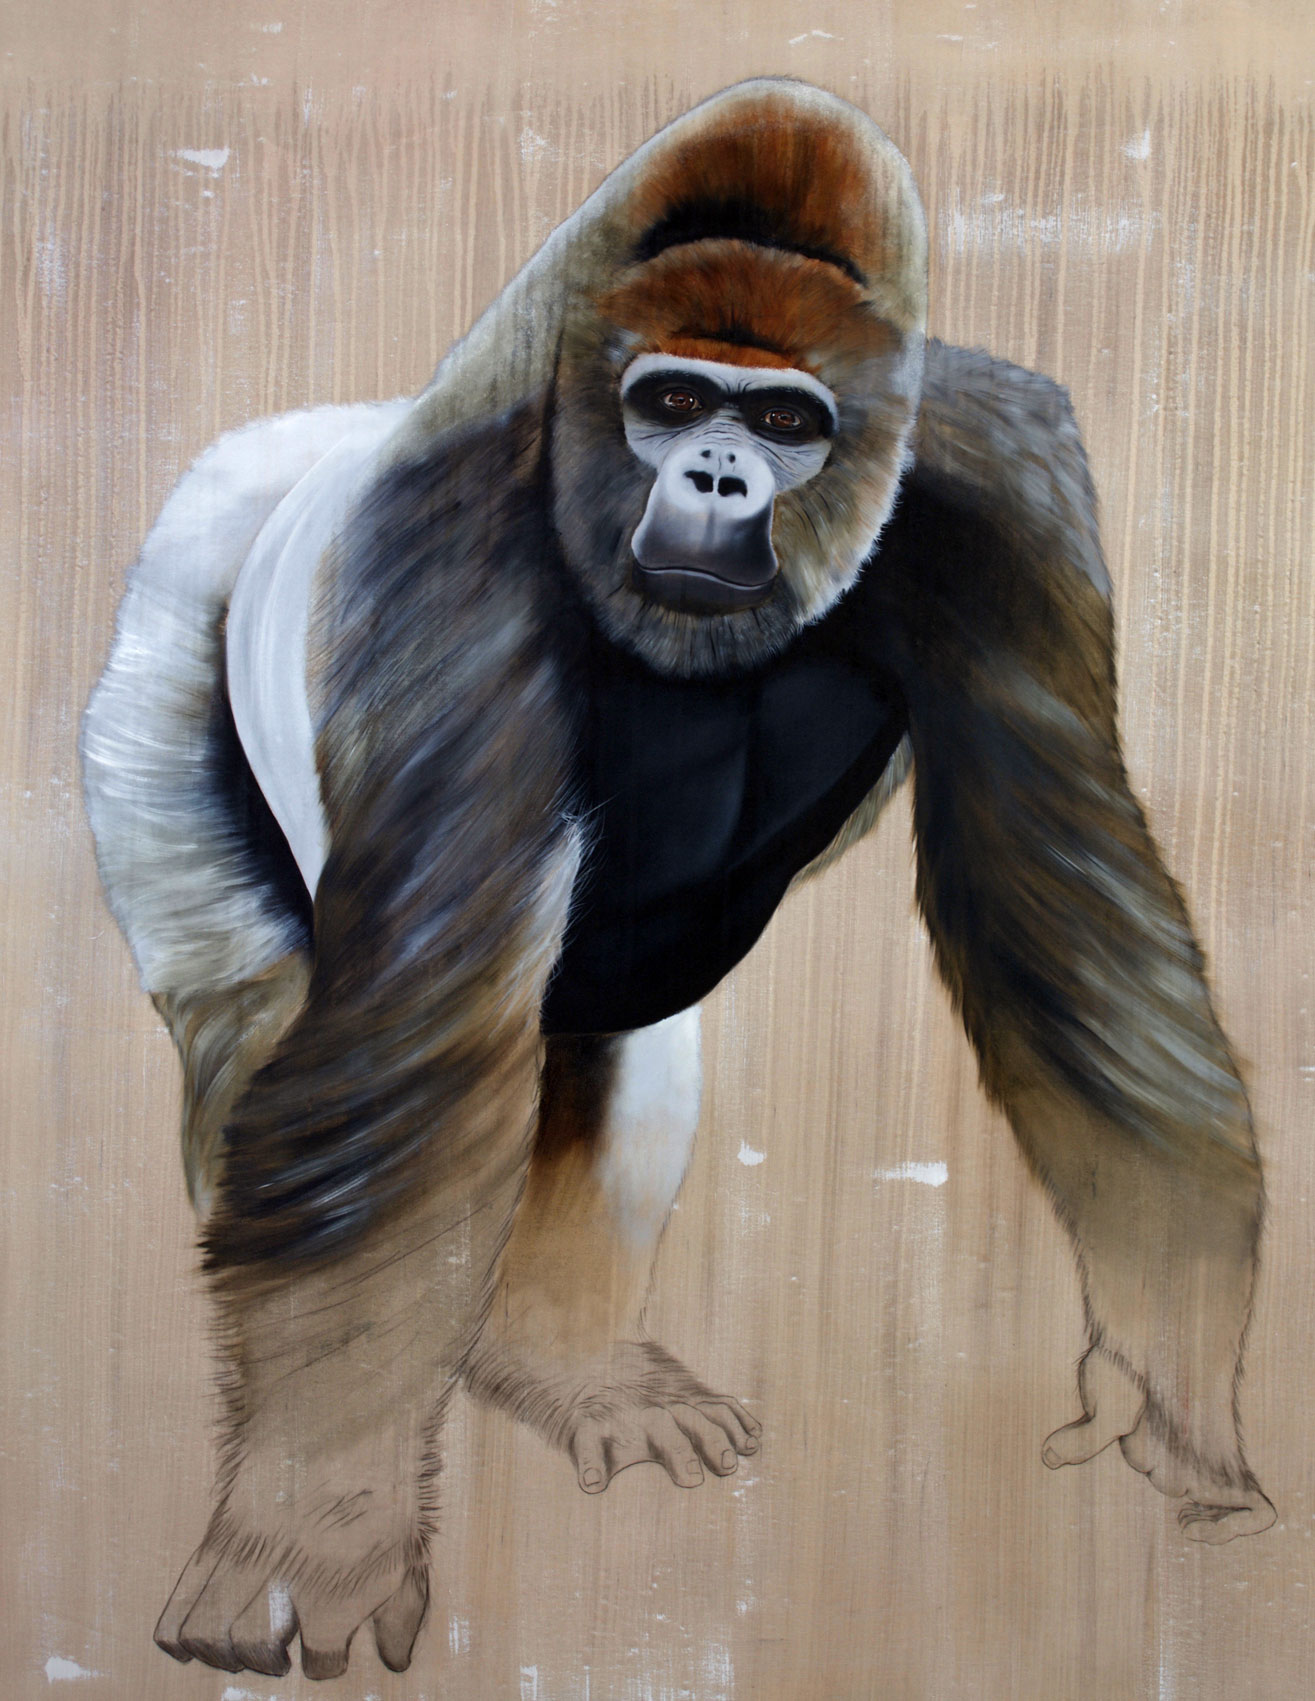 Gorilla gorilla  gorille-gorilla-primate-dos-argenté-singe-hominoïdes-extinction-protégé-disparition Thierry Bisch artiste peintre animaux tableau art  nature biodiversité conservation  